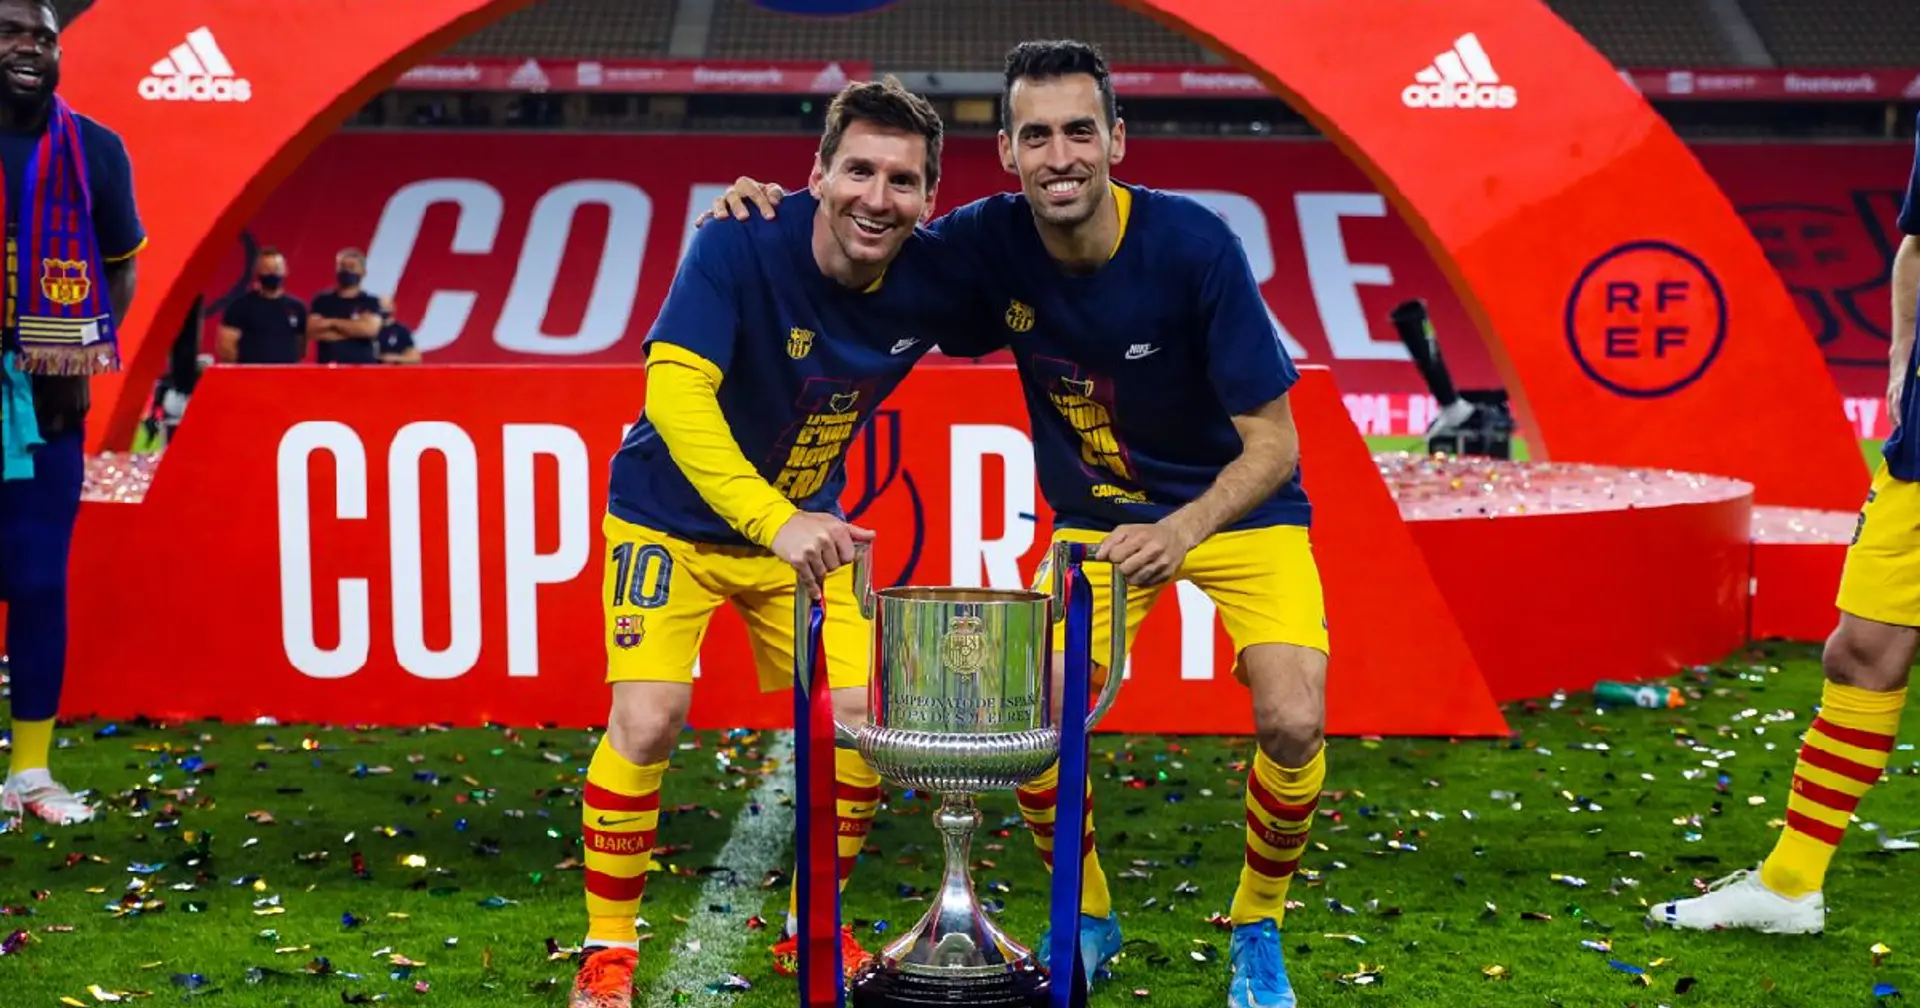 Résultats du tirage au sort de la Copa Del Rey: Barcelone affrontera Linares, troisième niveau espagnol